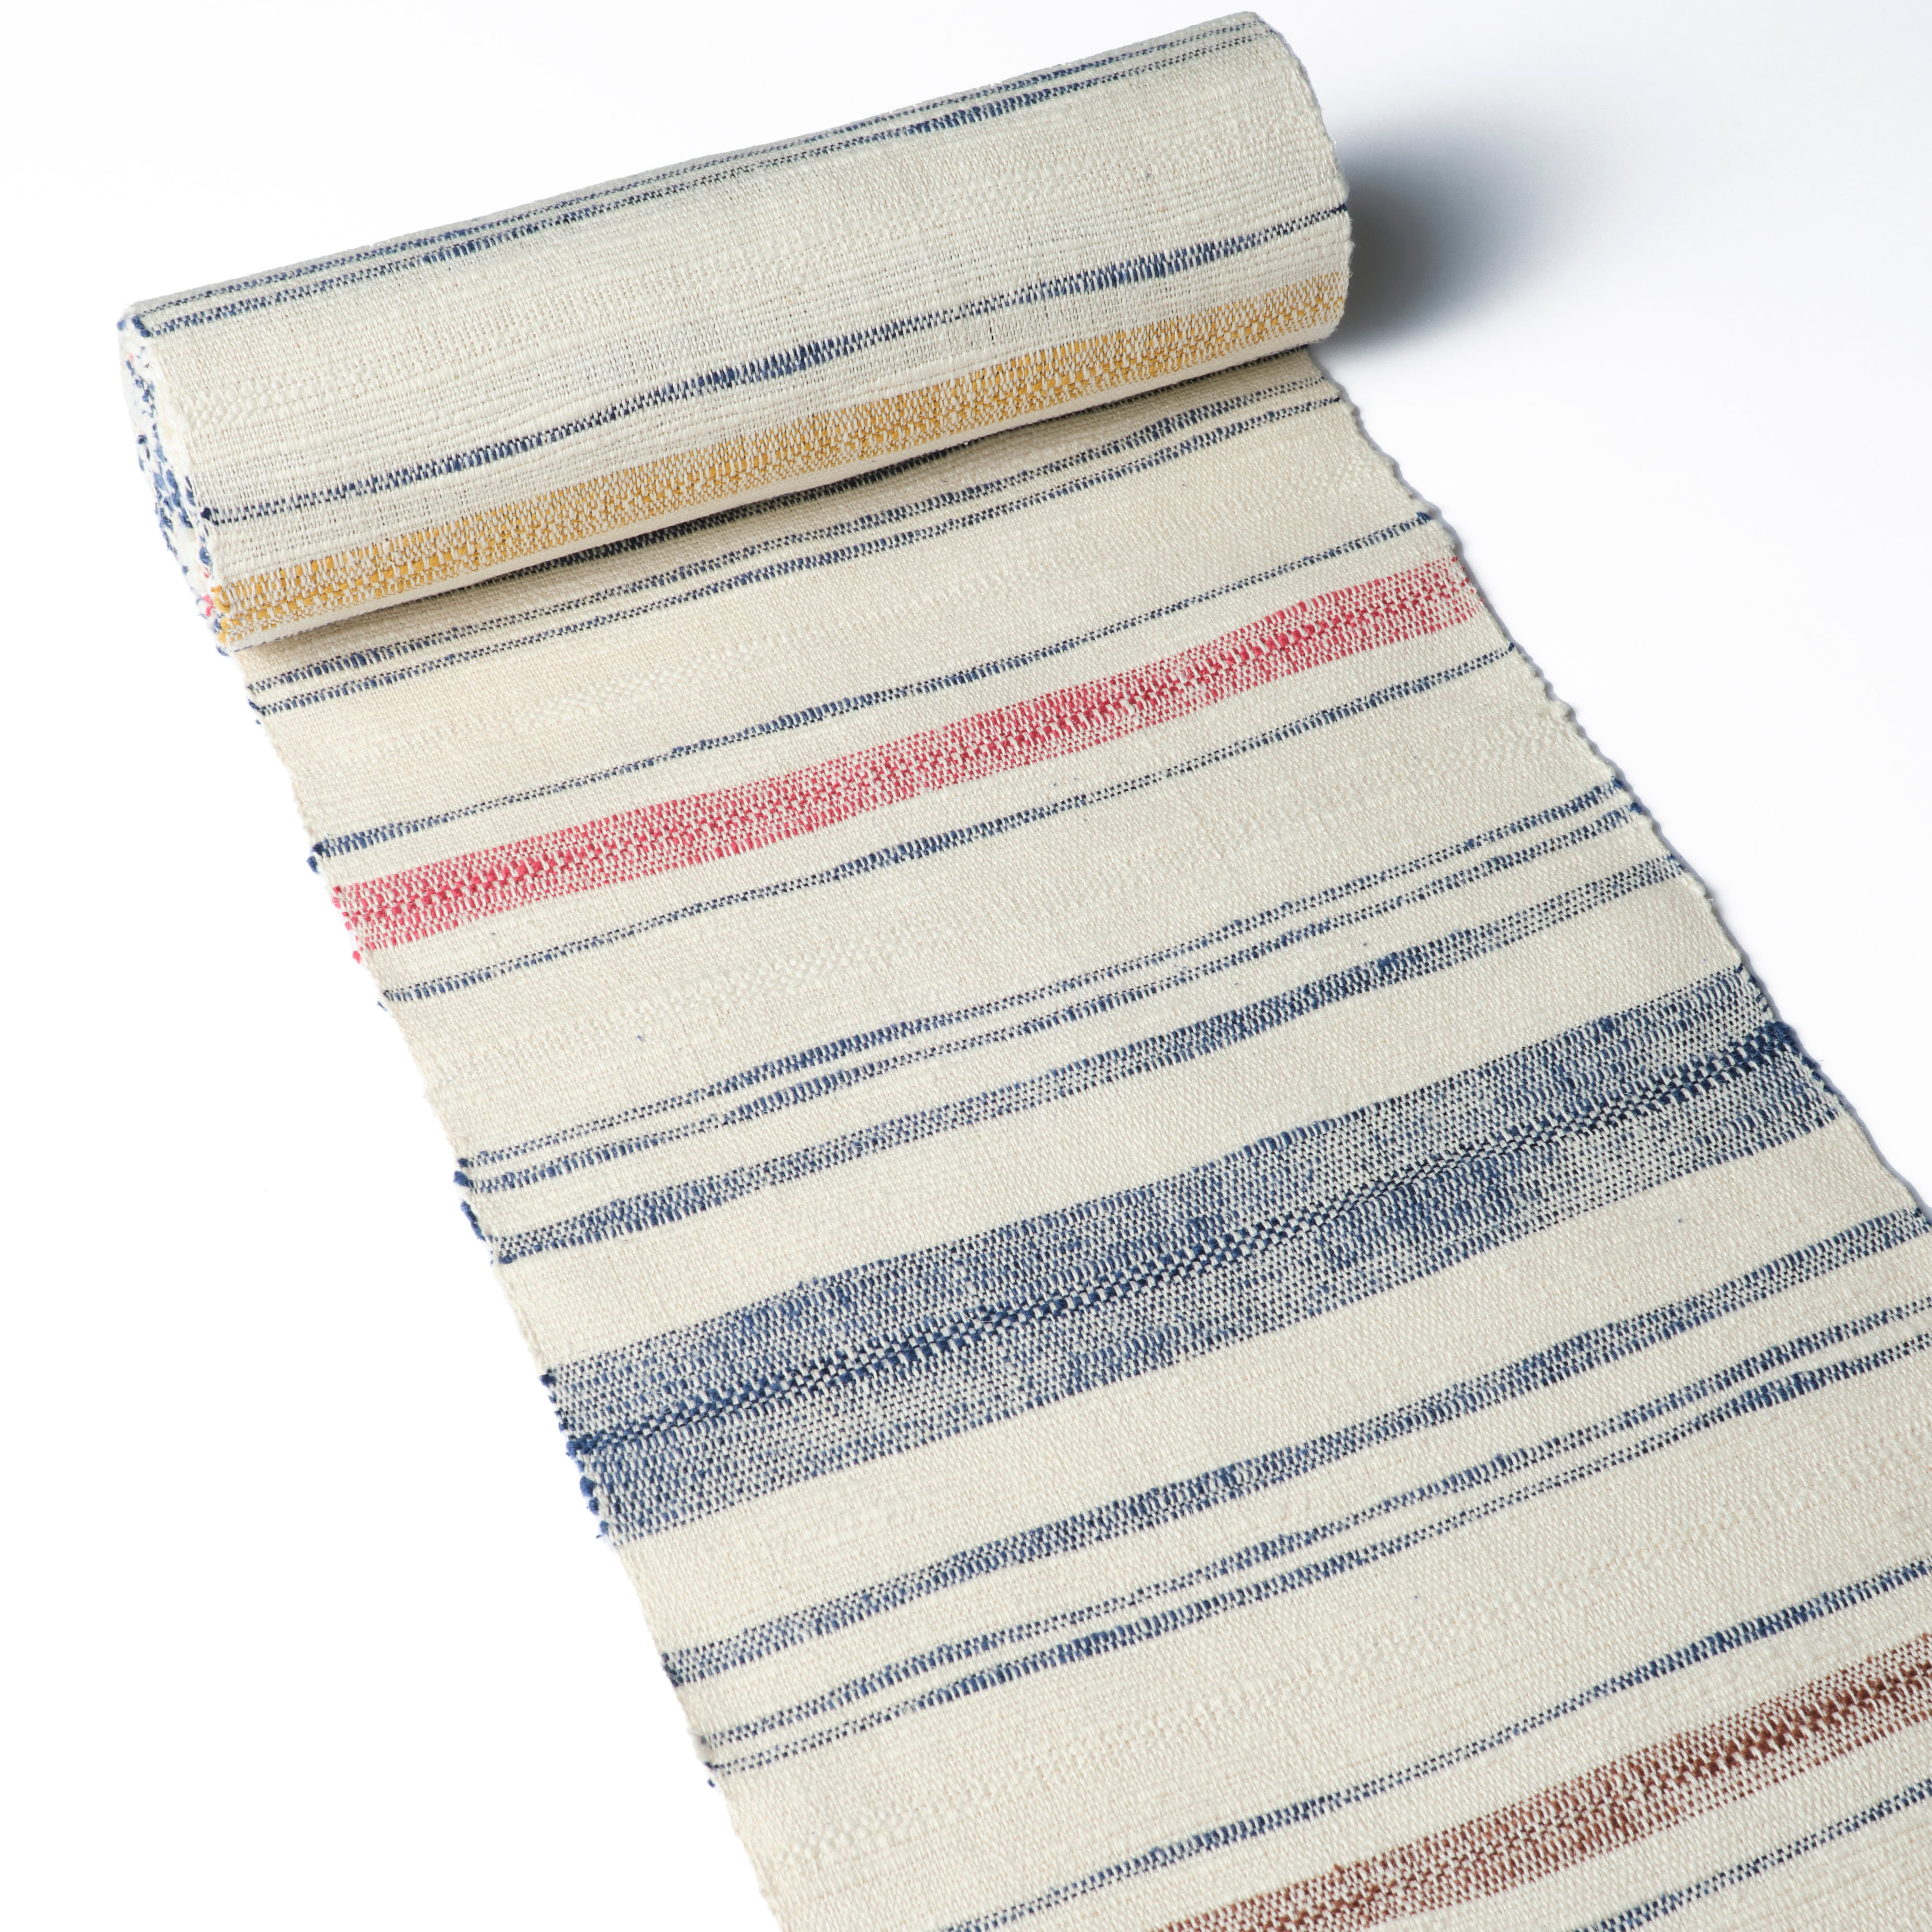 Hassun obi pure silk "Kiryu-ori hand-woven pongee" multi-colored border